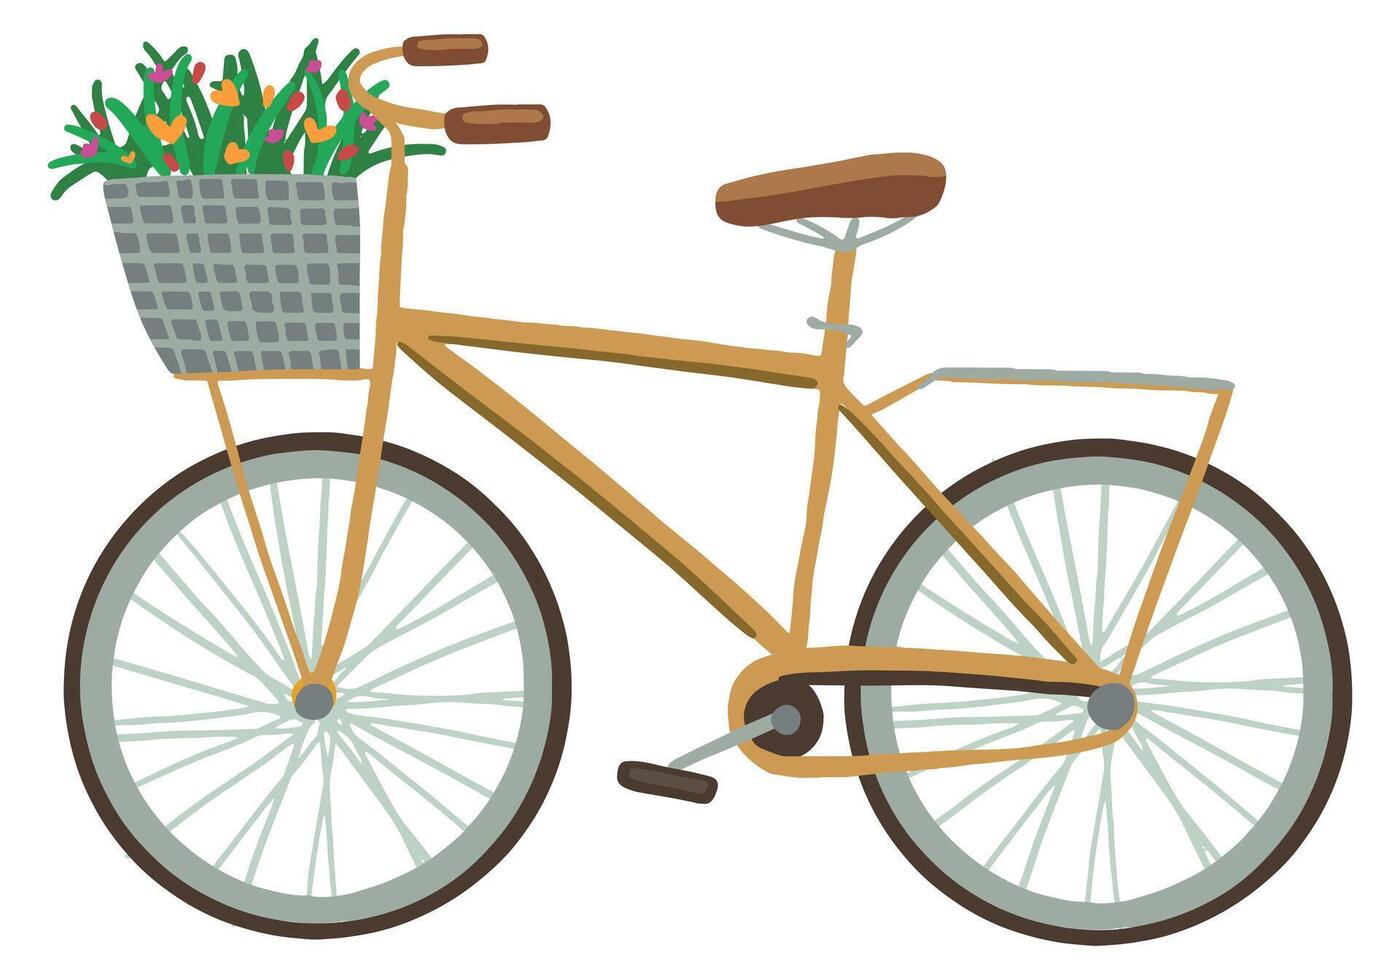 bicicleta con un cesta de flores silvestres mano dibujado vector valores ilustración. de colores dibujos animados garabatear. soltero dibujo aislado en blanco antecedentes. elemento para diseño, imprimir, pegatina, tarjeta, decoración, envoltura.